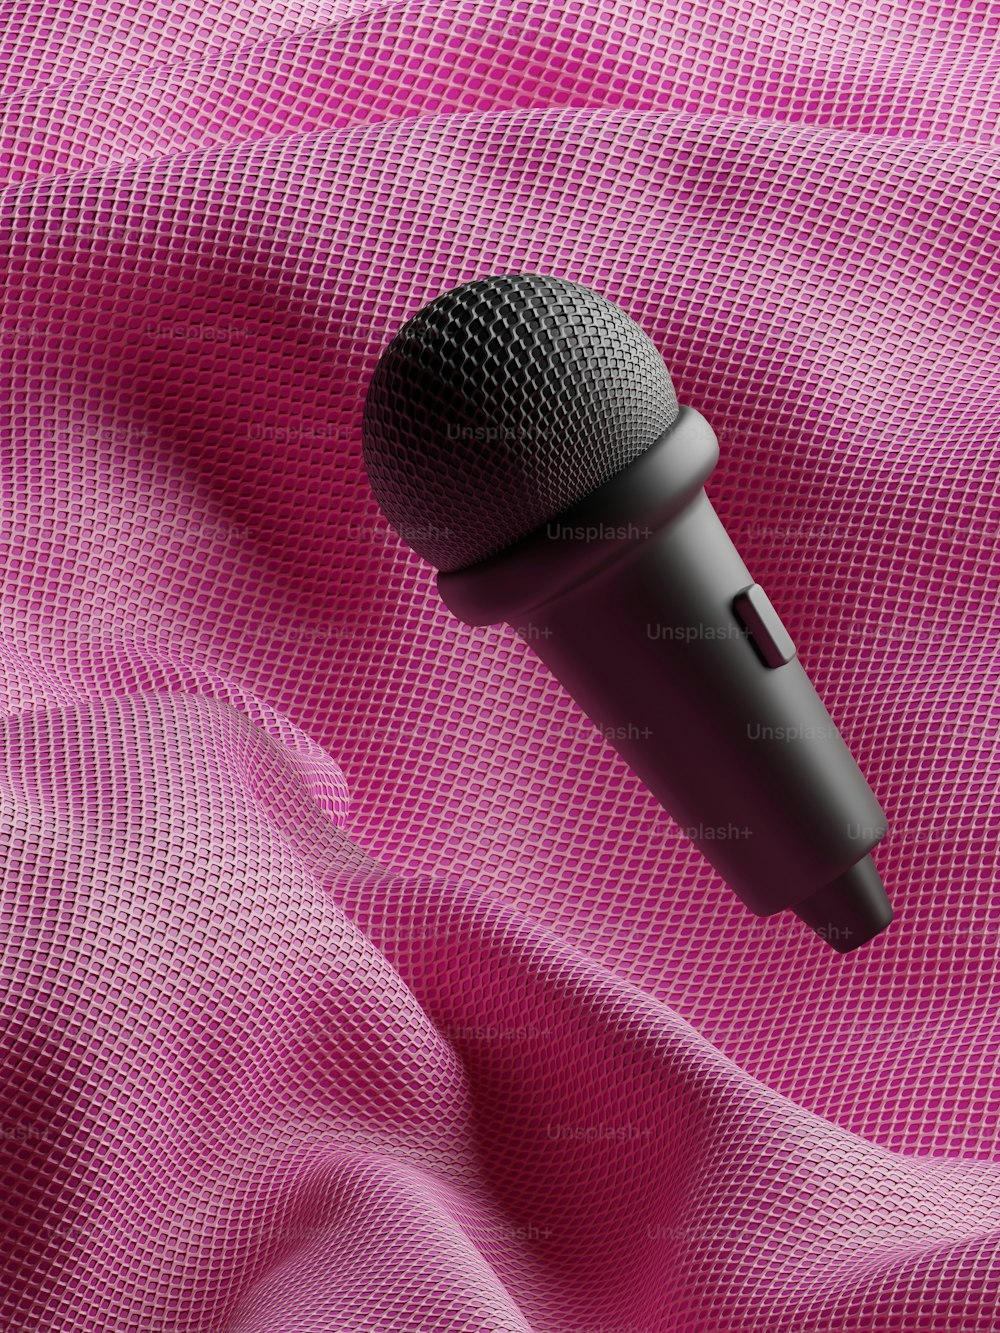 un microphone sur un tissu rose